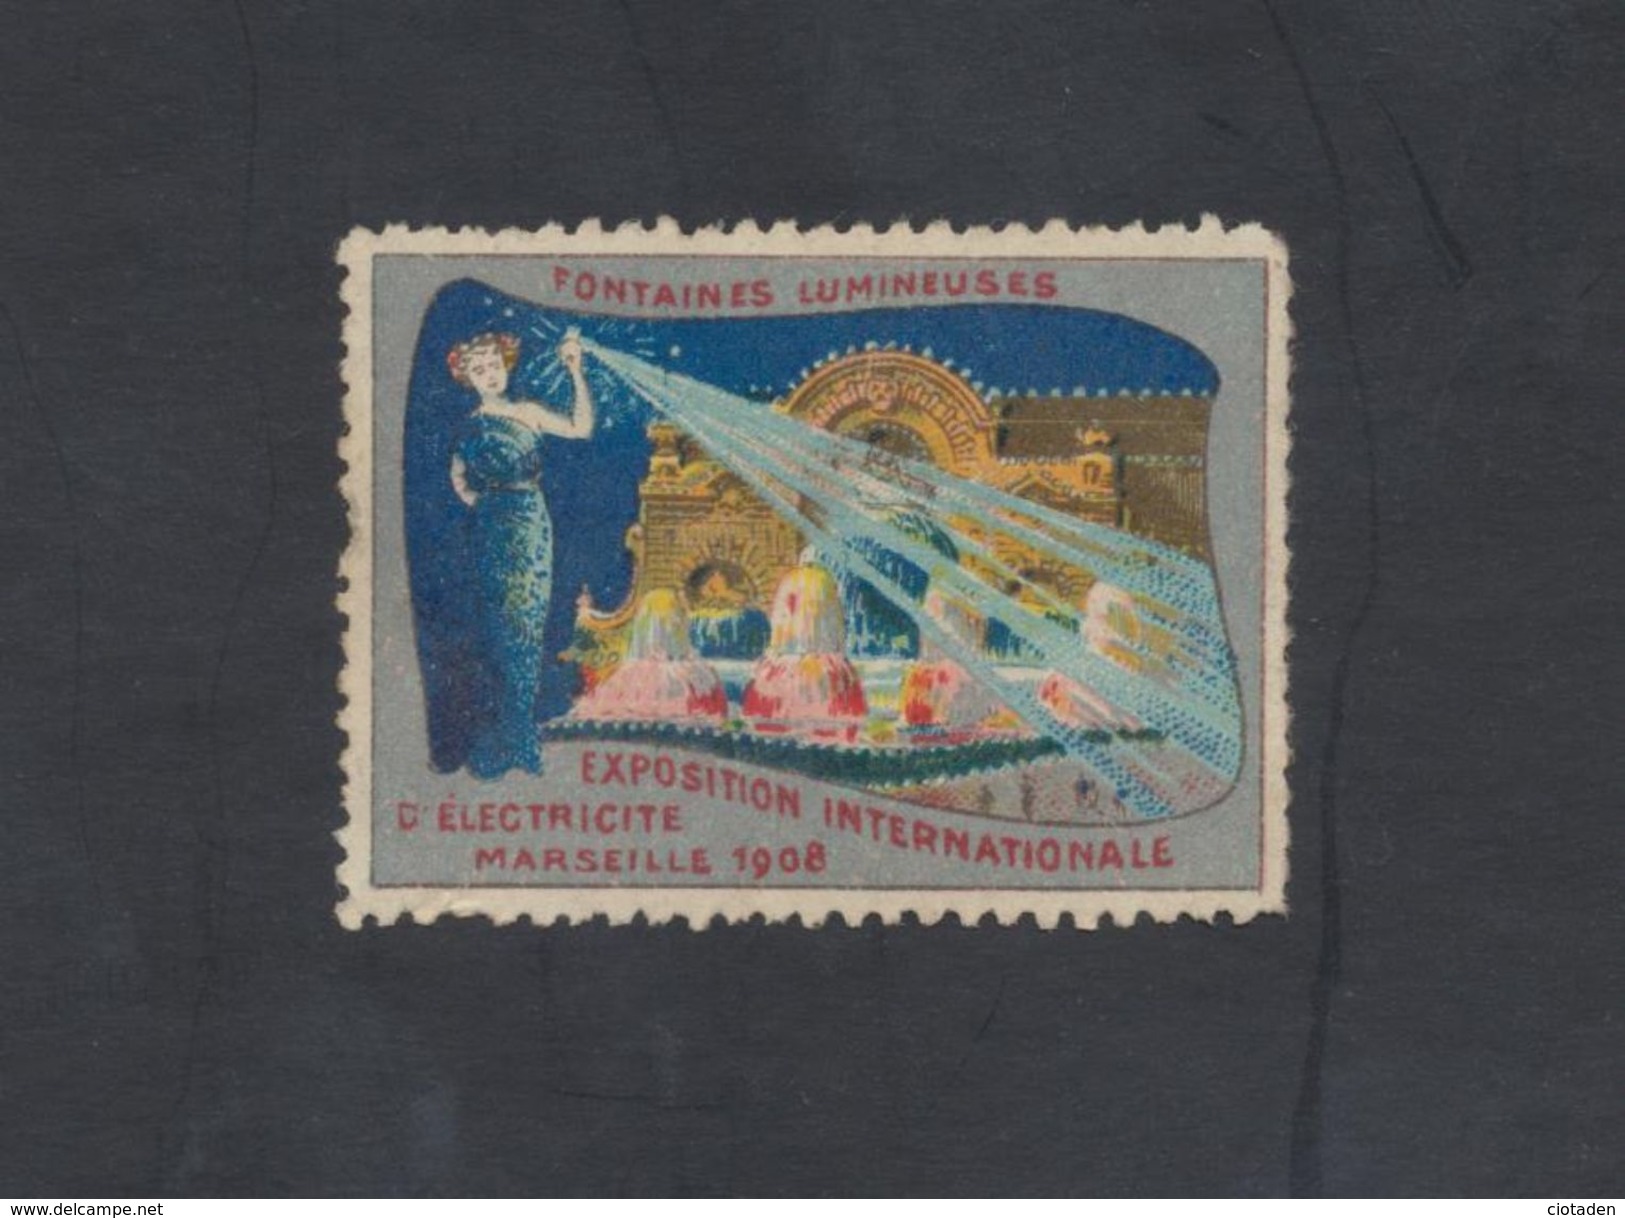 Exposition Internationale D'Electricité - Marseille 1908 - Fontaine Lumineuse - Briefmarkenmessen